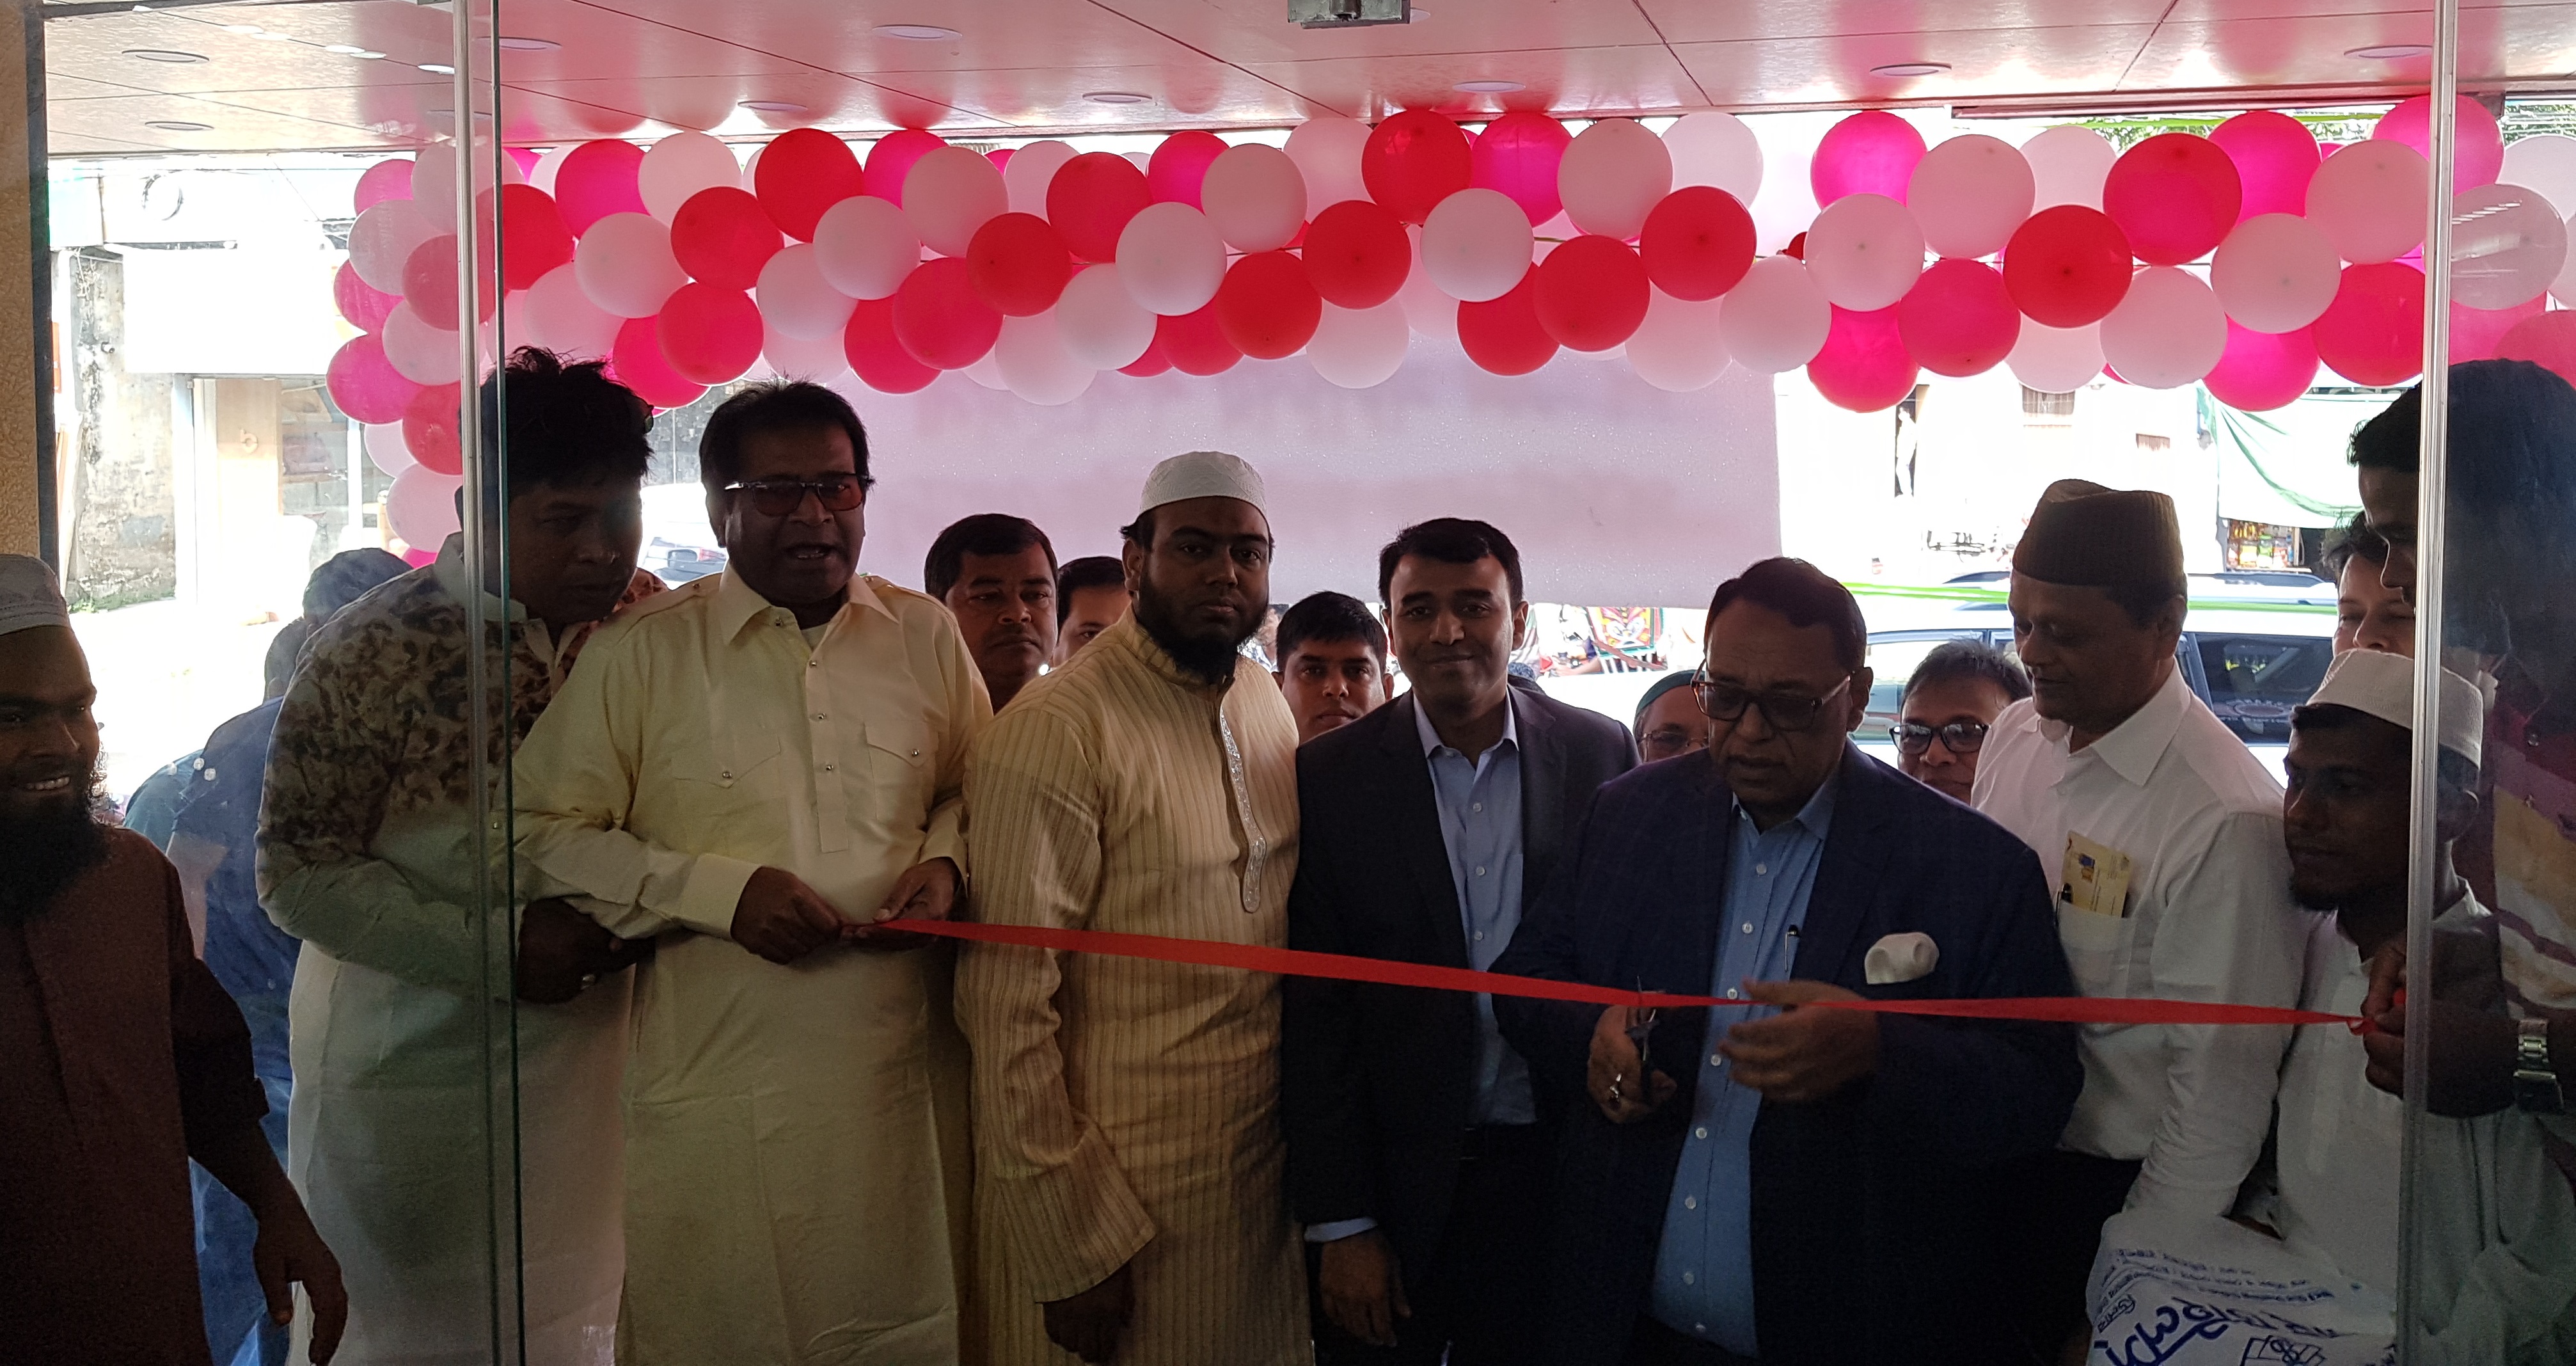 Mir Ceramic opens new outlet “Shah Tiles” in Rajshahi